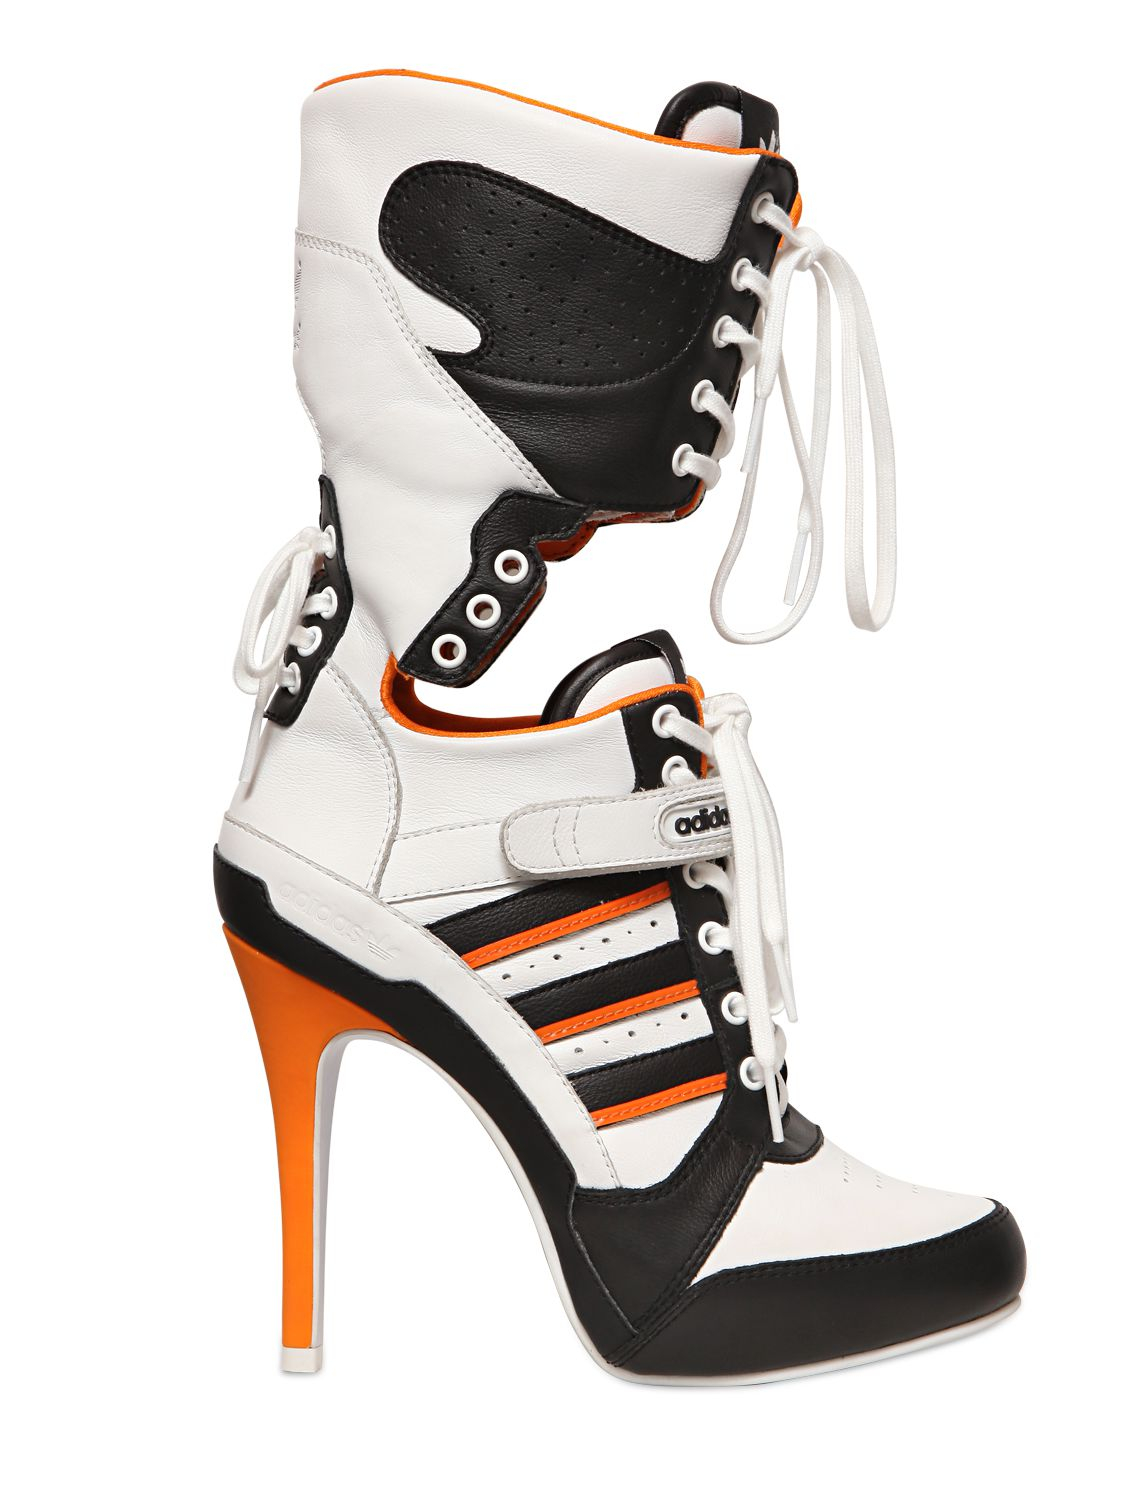 Jeremy Scott for adidas 130mm Js High Heel Leather Boots in White/Black  (Orange) | Lyst UK